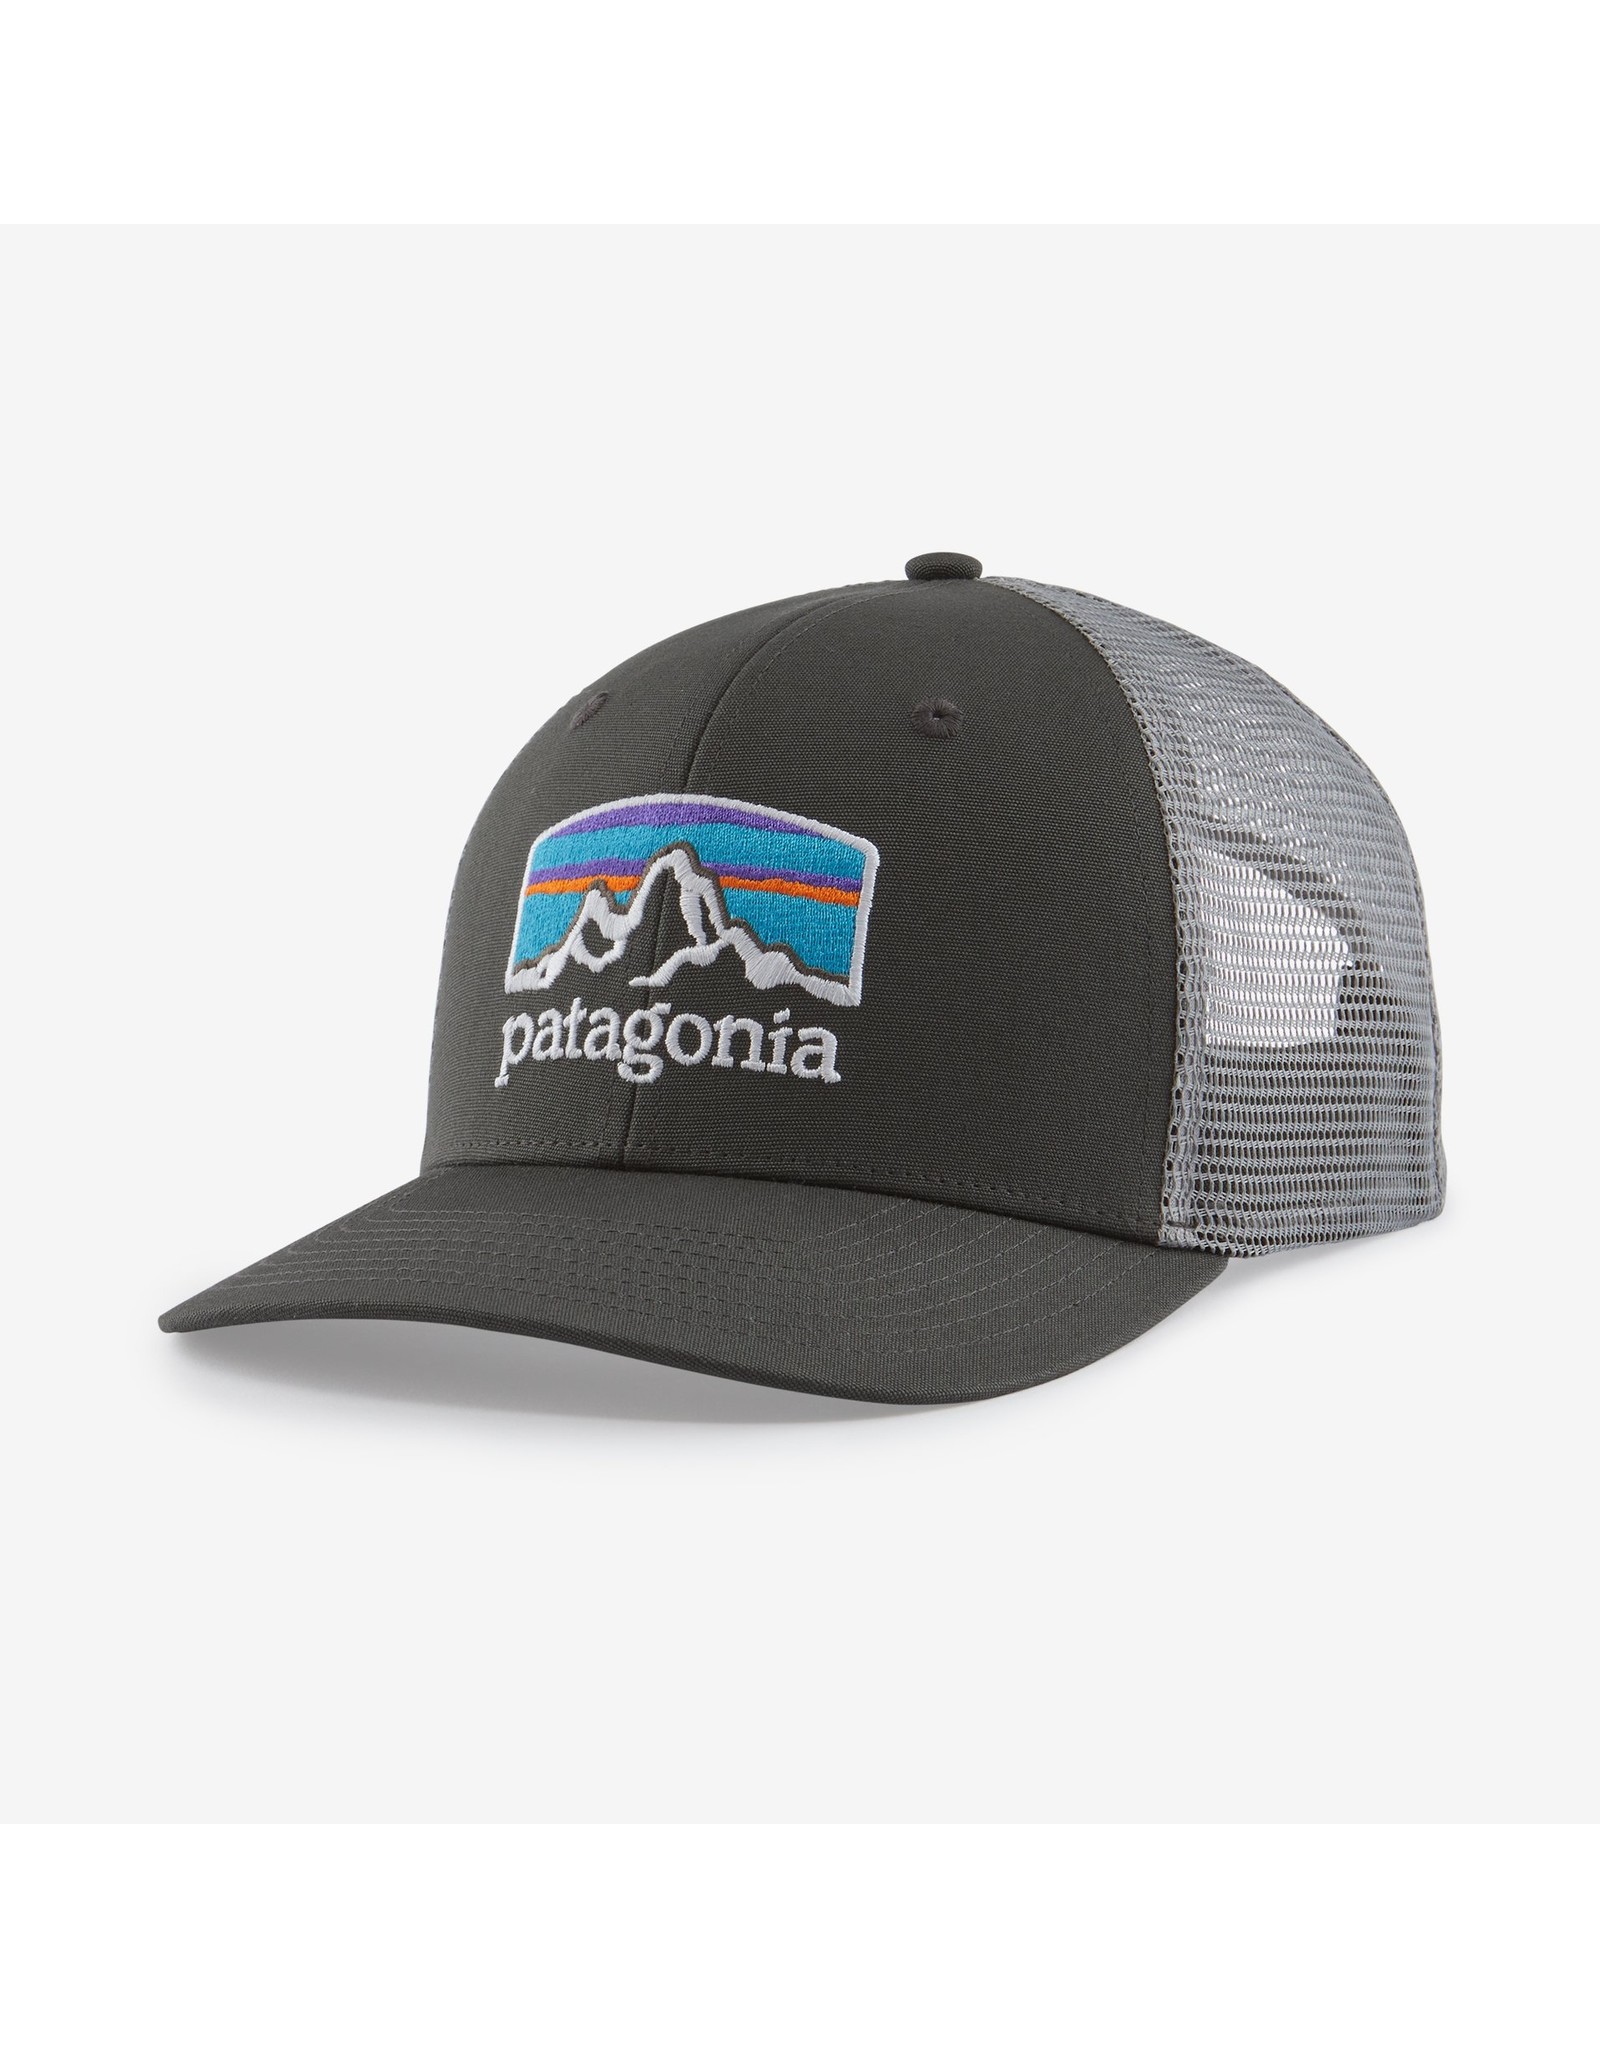 Patagonia Patagonia Fitz Roy Trucker Hat Forge Grey